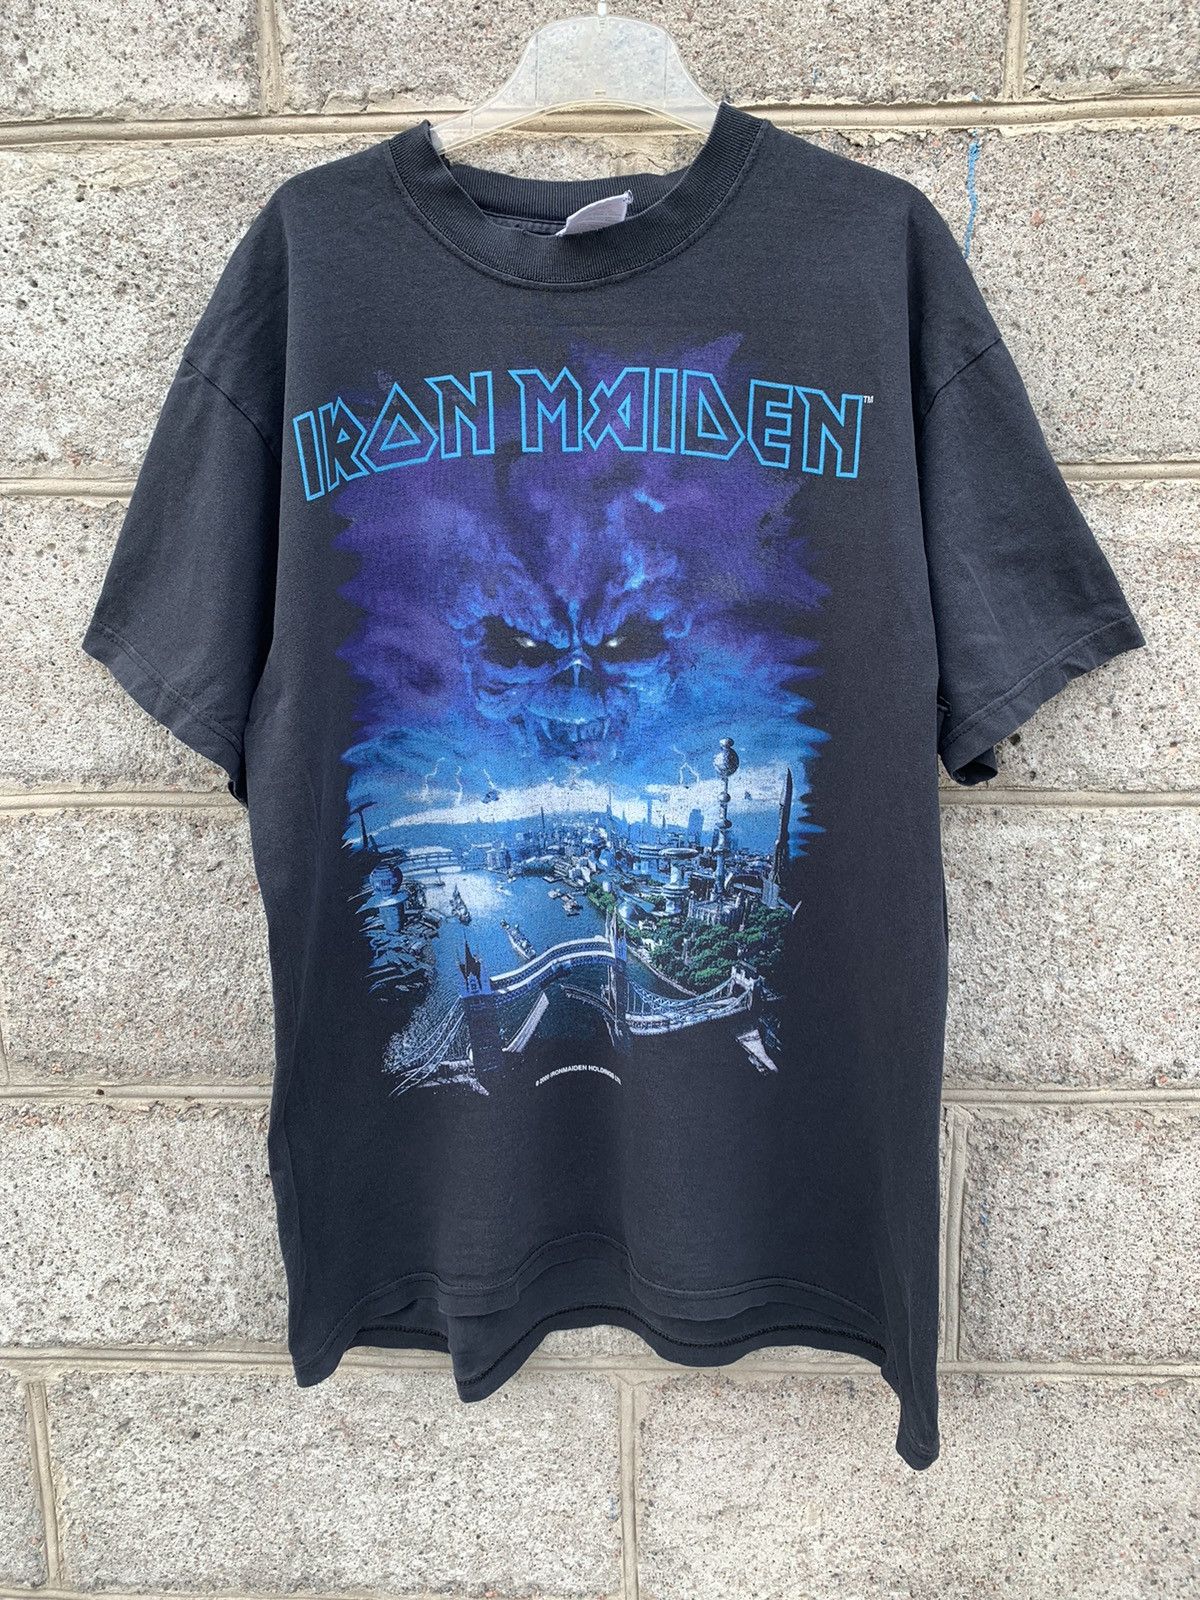 Pre-owned Band Tees X Iron Maiden Vintage 2000 Iron Maiden (judas Priest Black Sabbath Ac/dc) (size Large)